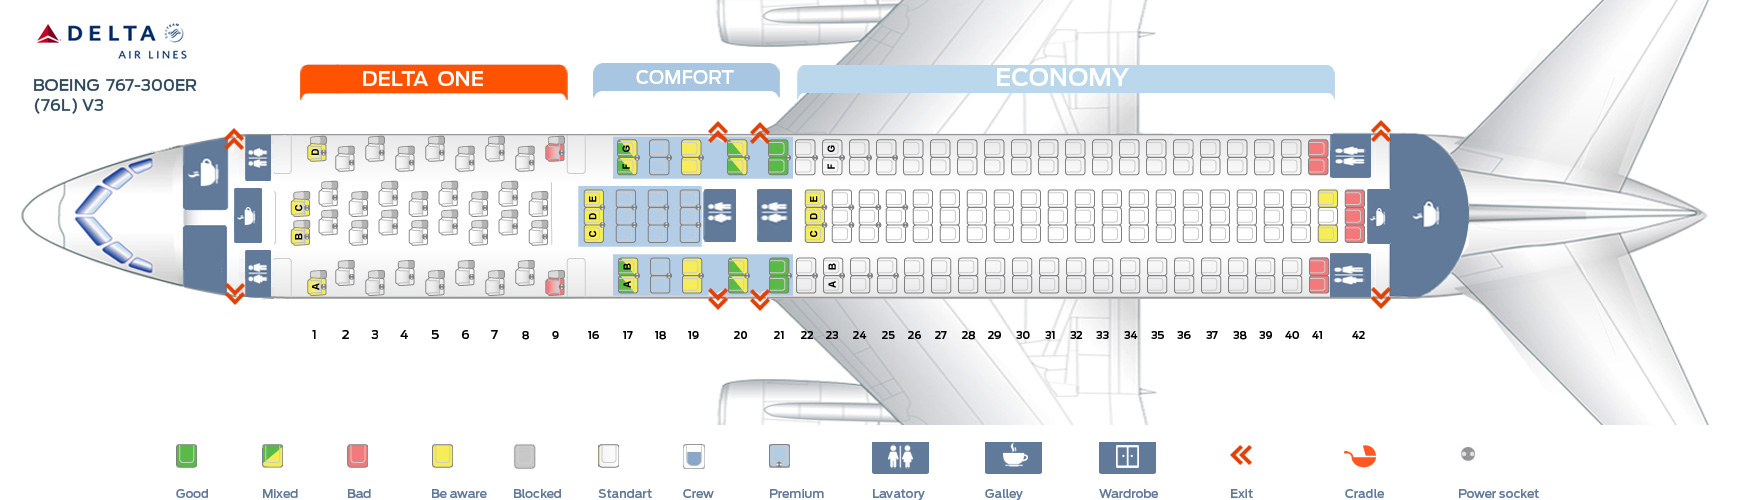 British Airways Boeing 767 Seating Chart